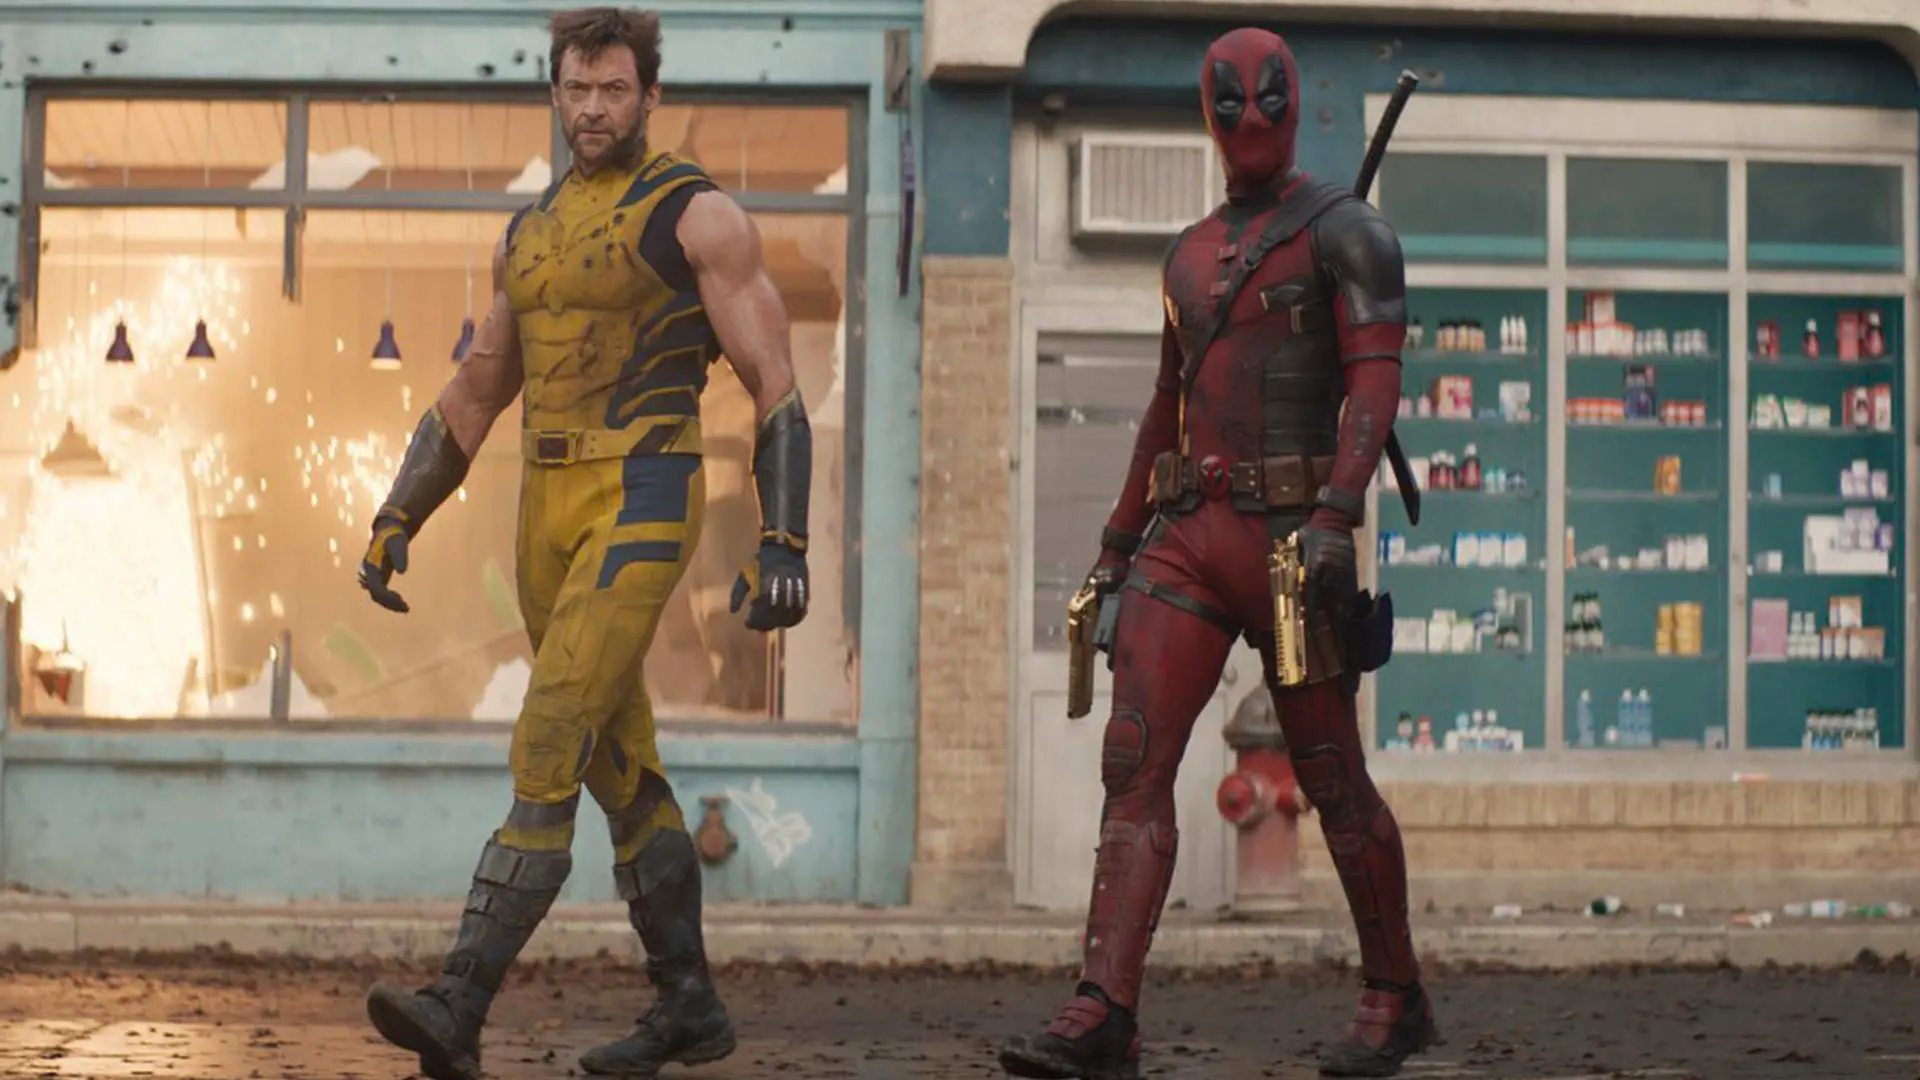 پوستر جدید فیلم Deadpool and Wolverine